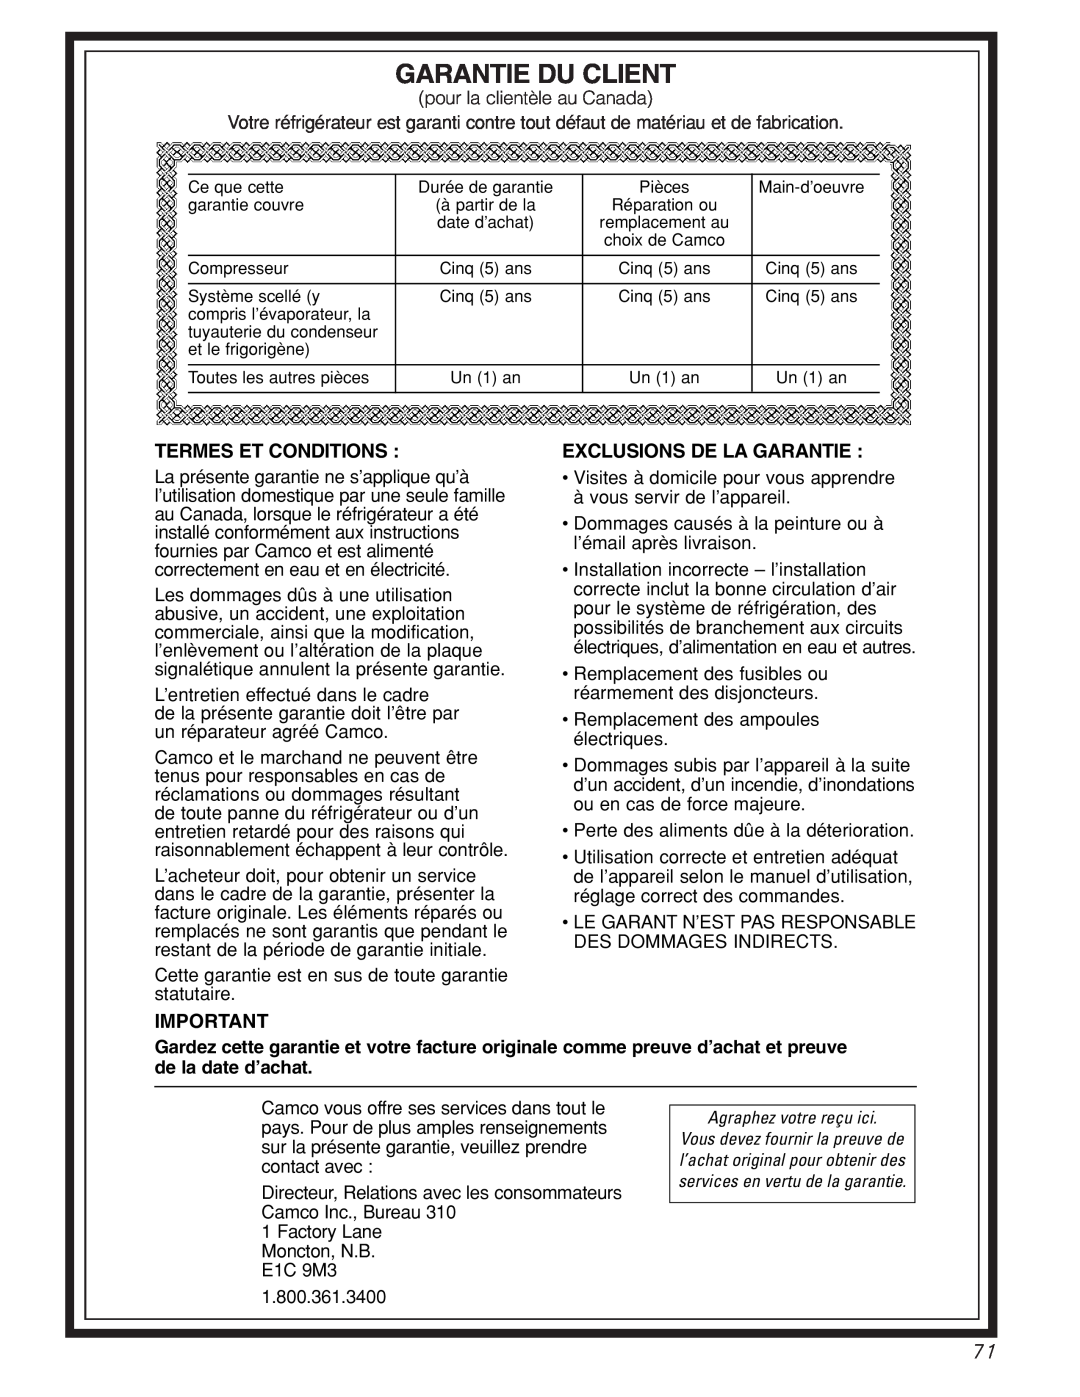 GE Monogram 23 installation instructions Garantie Du Client, Termes Et Conditions, Exclusions De La Garantie 